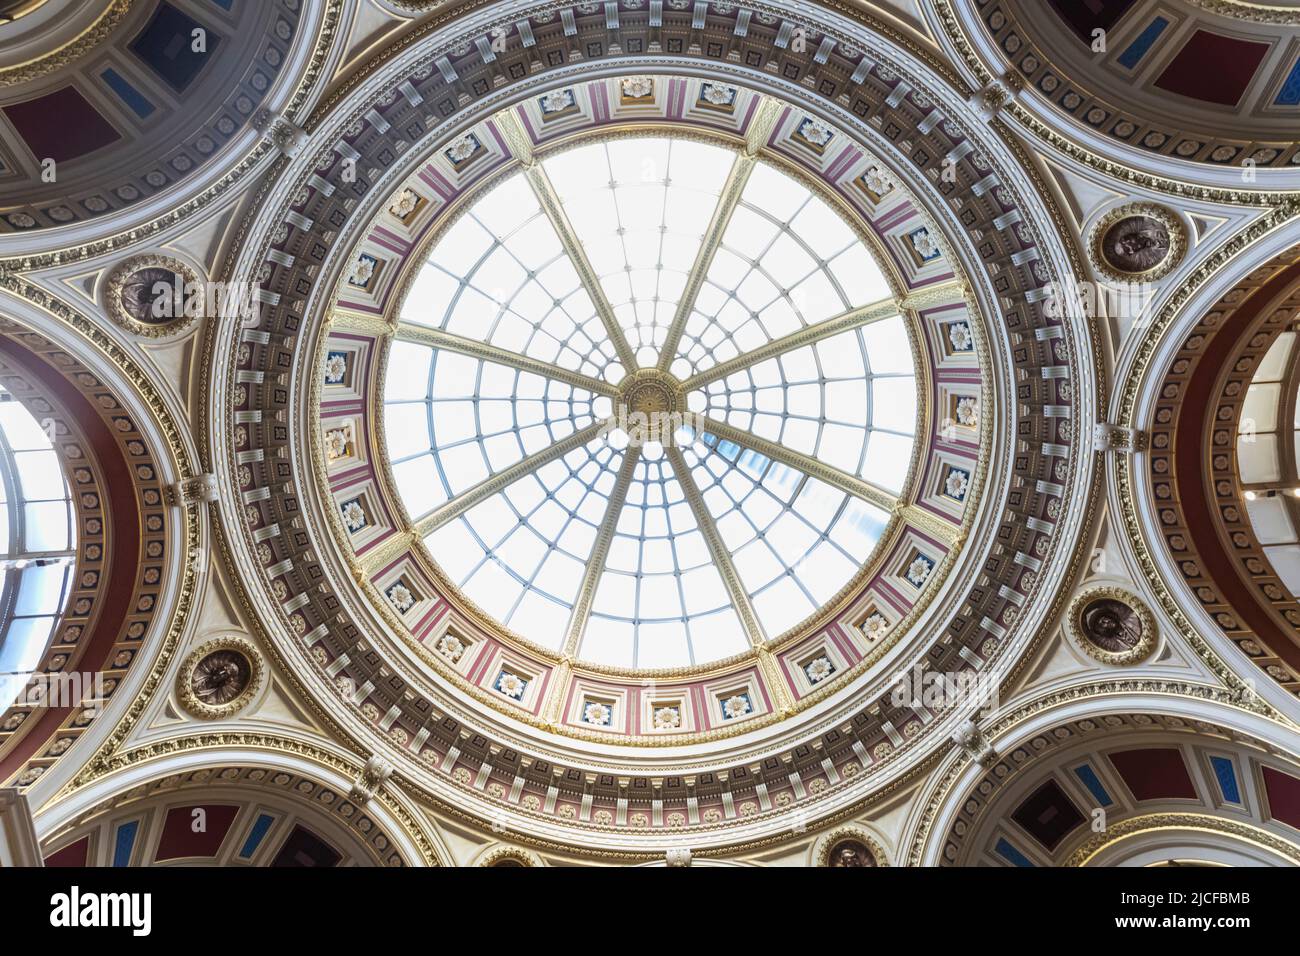 England, London, Trafalgar Square, National Gallery, Interior View Stock Photo